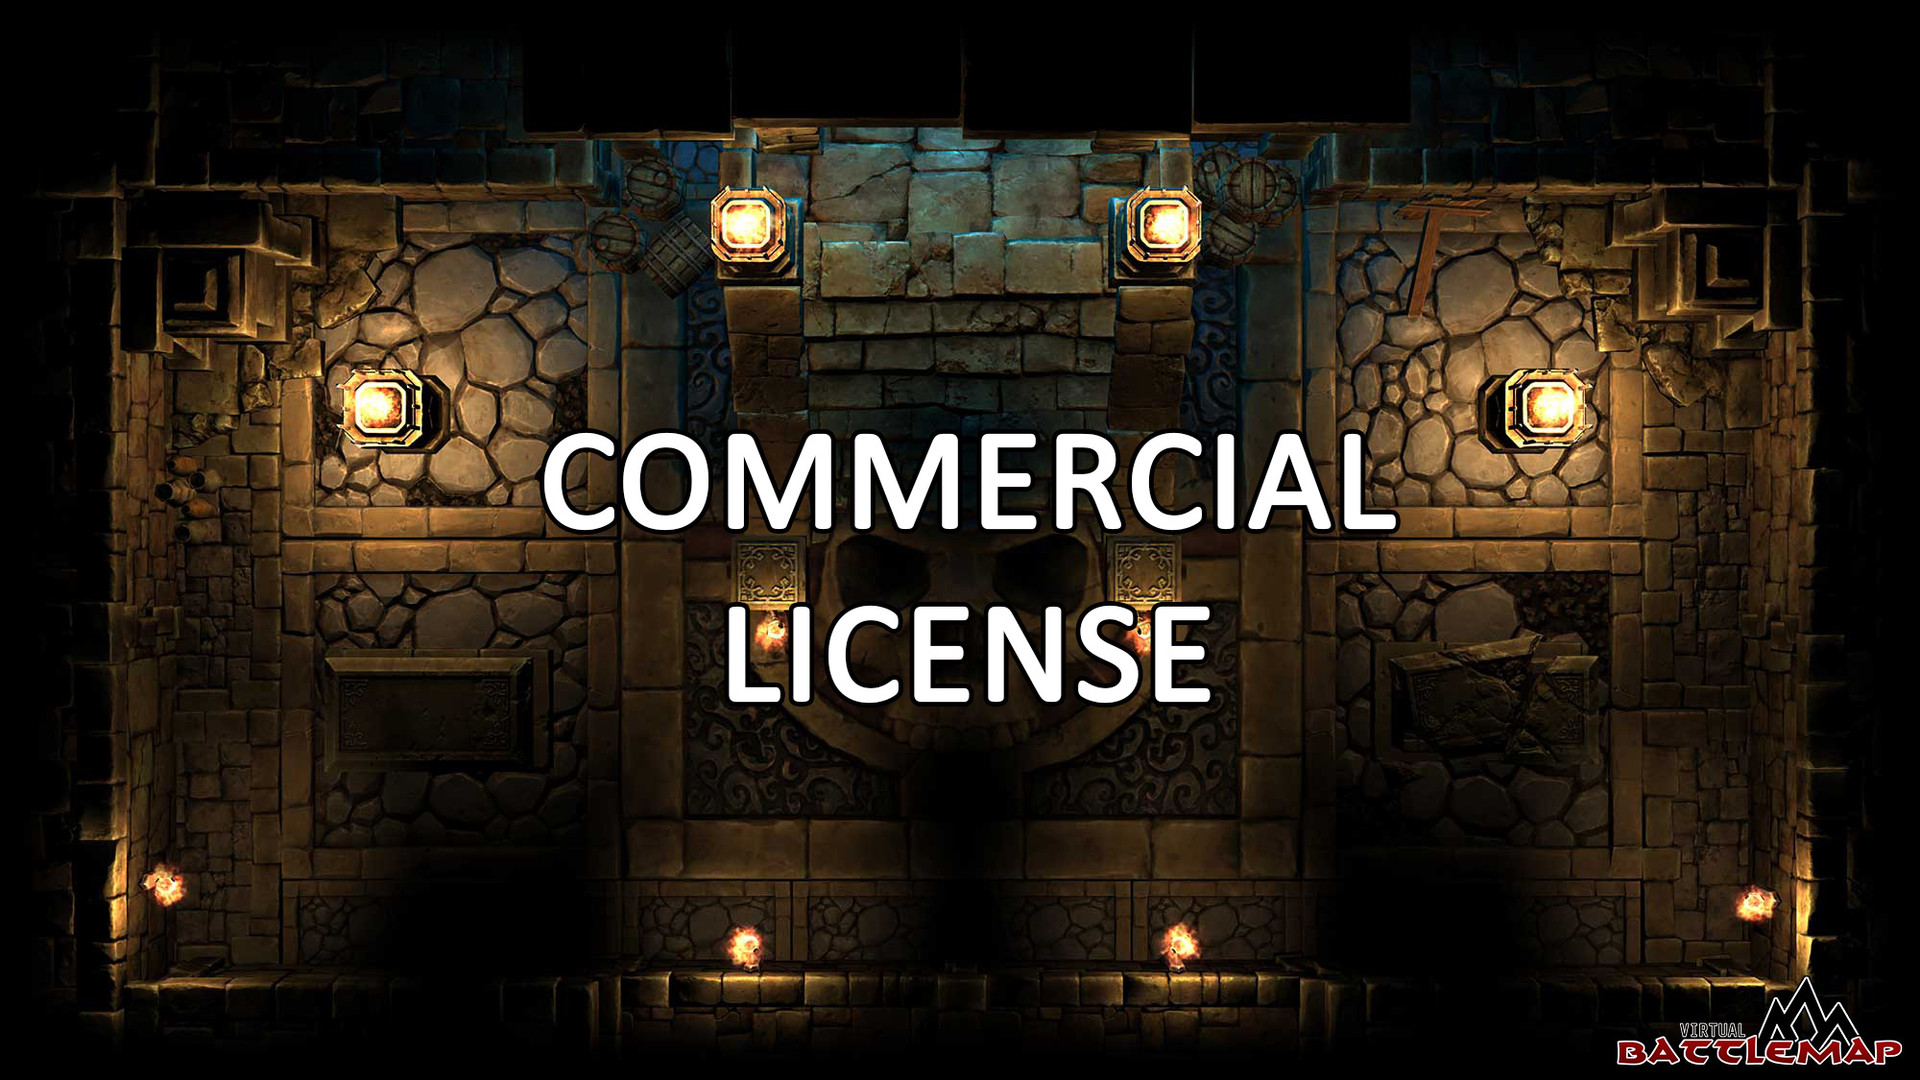 Commercial license. Virtual Battlemap.